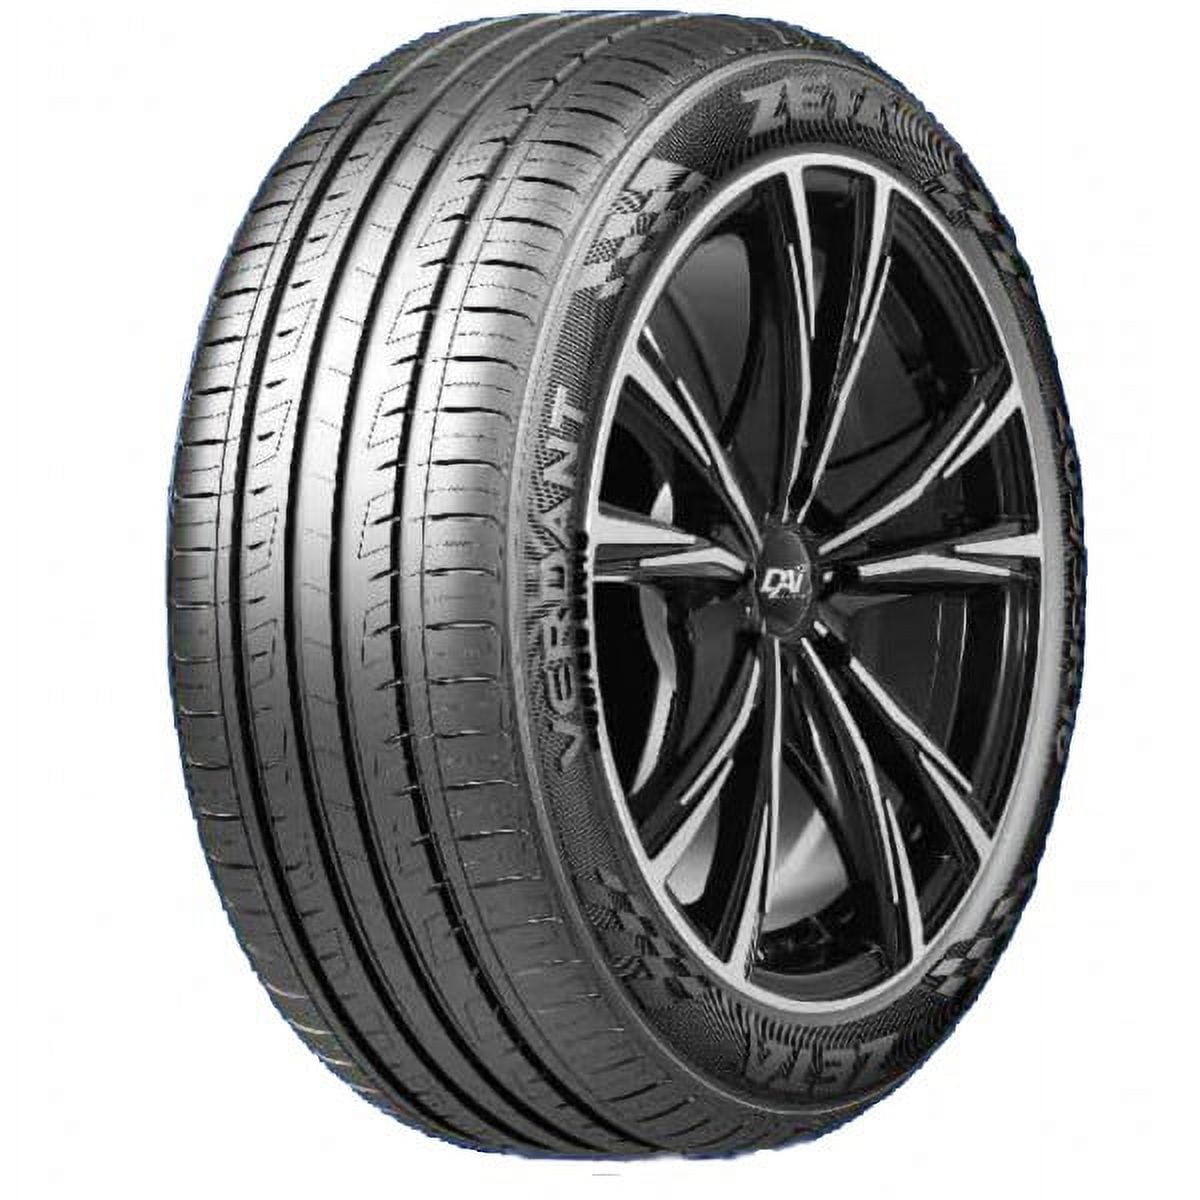 Honda 88 Fuel Accent 185/65R15 H Hyundai Fit Fits: Tire EV Max Assurance Goodyear 2013-14 2017 LE,